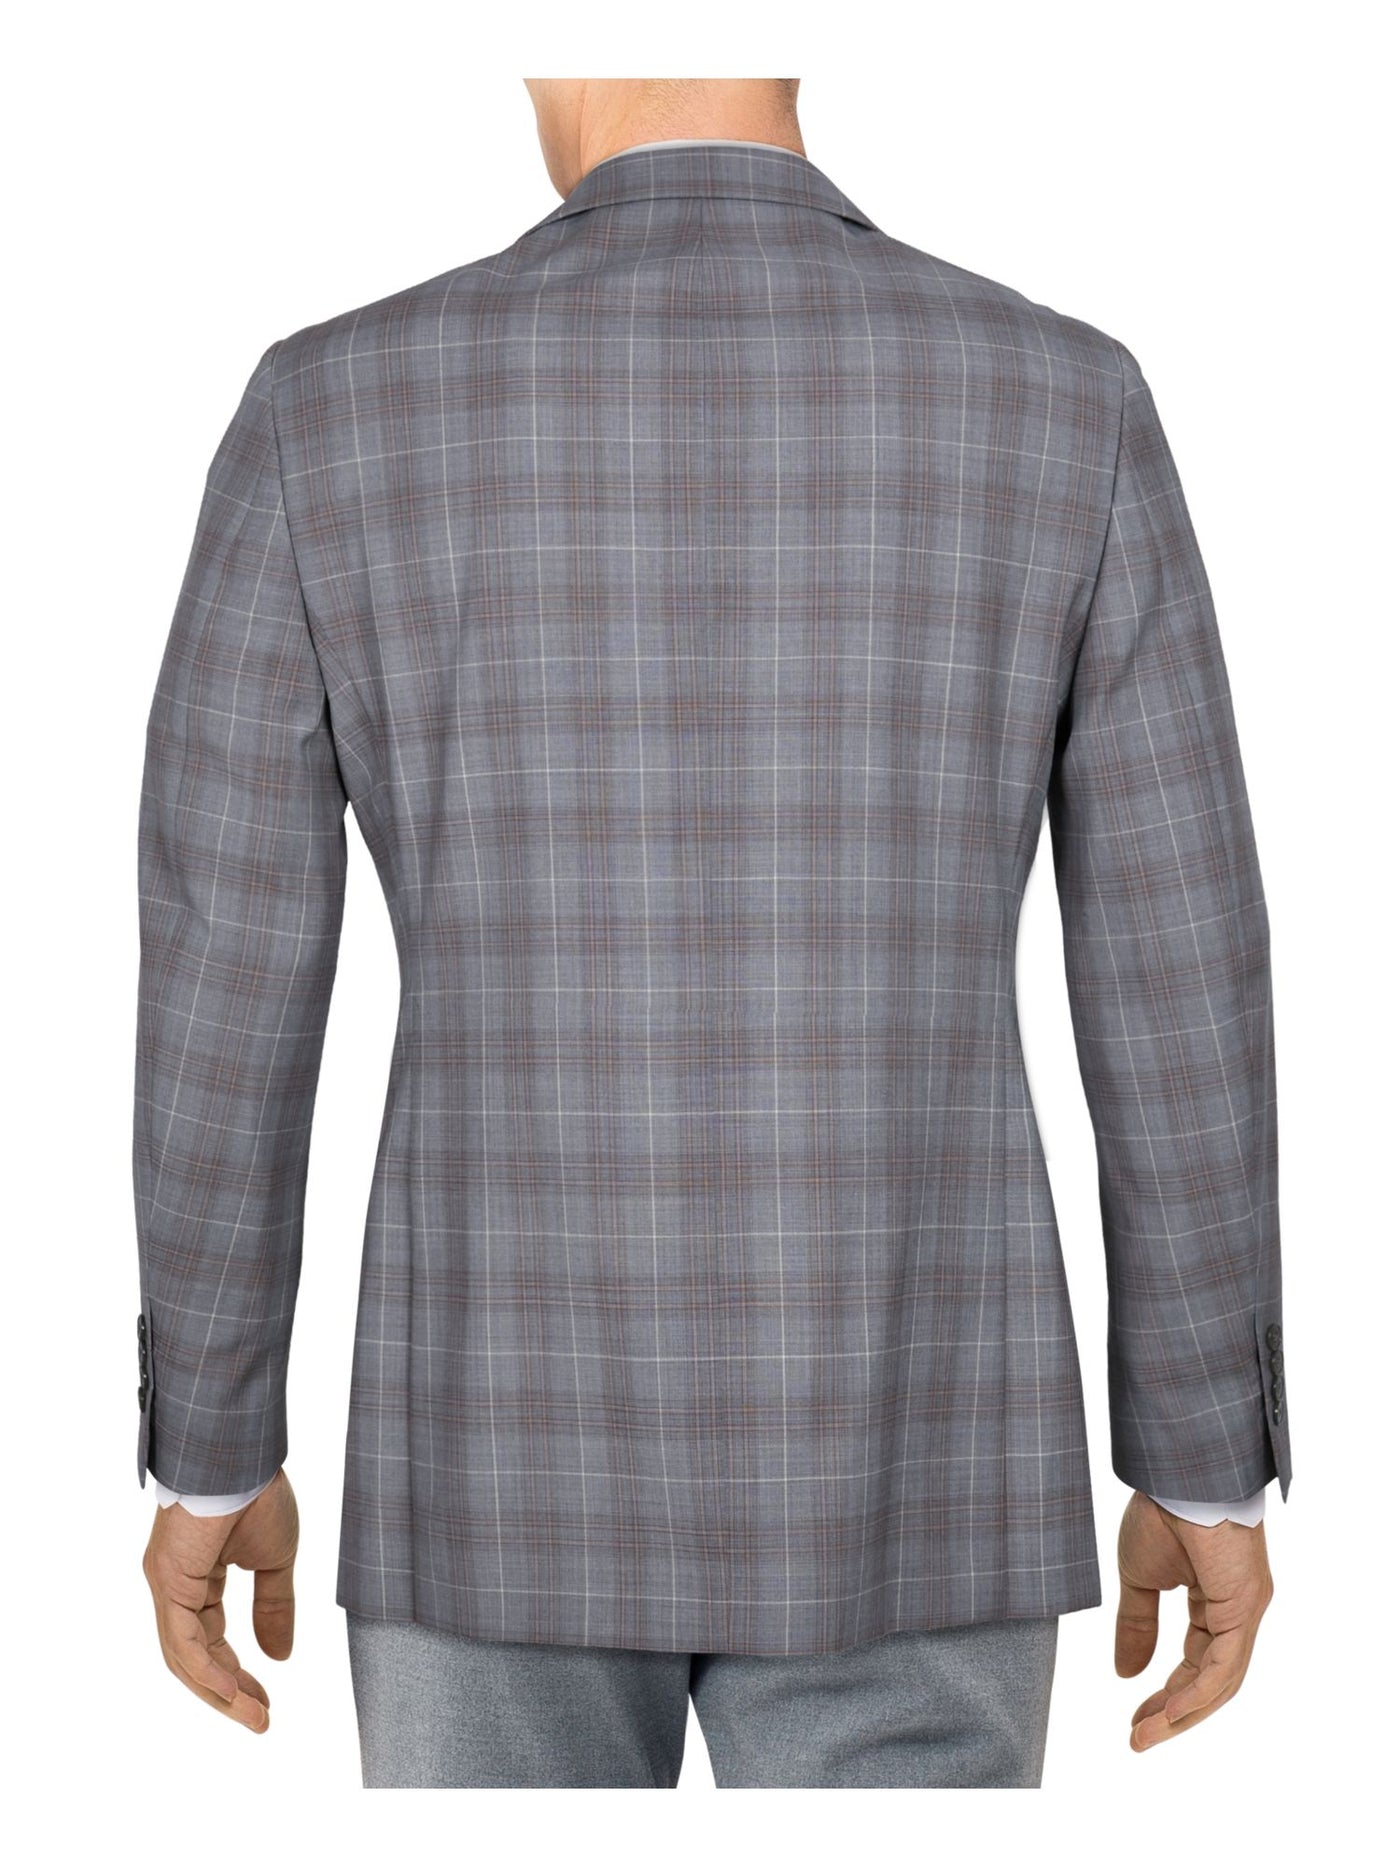 TALLIA ORANGE Mens Gray Single Breasted, Plaid Slim Fit Stretch Suit Blazer 44S